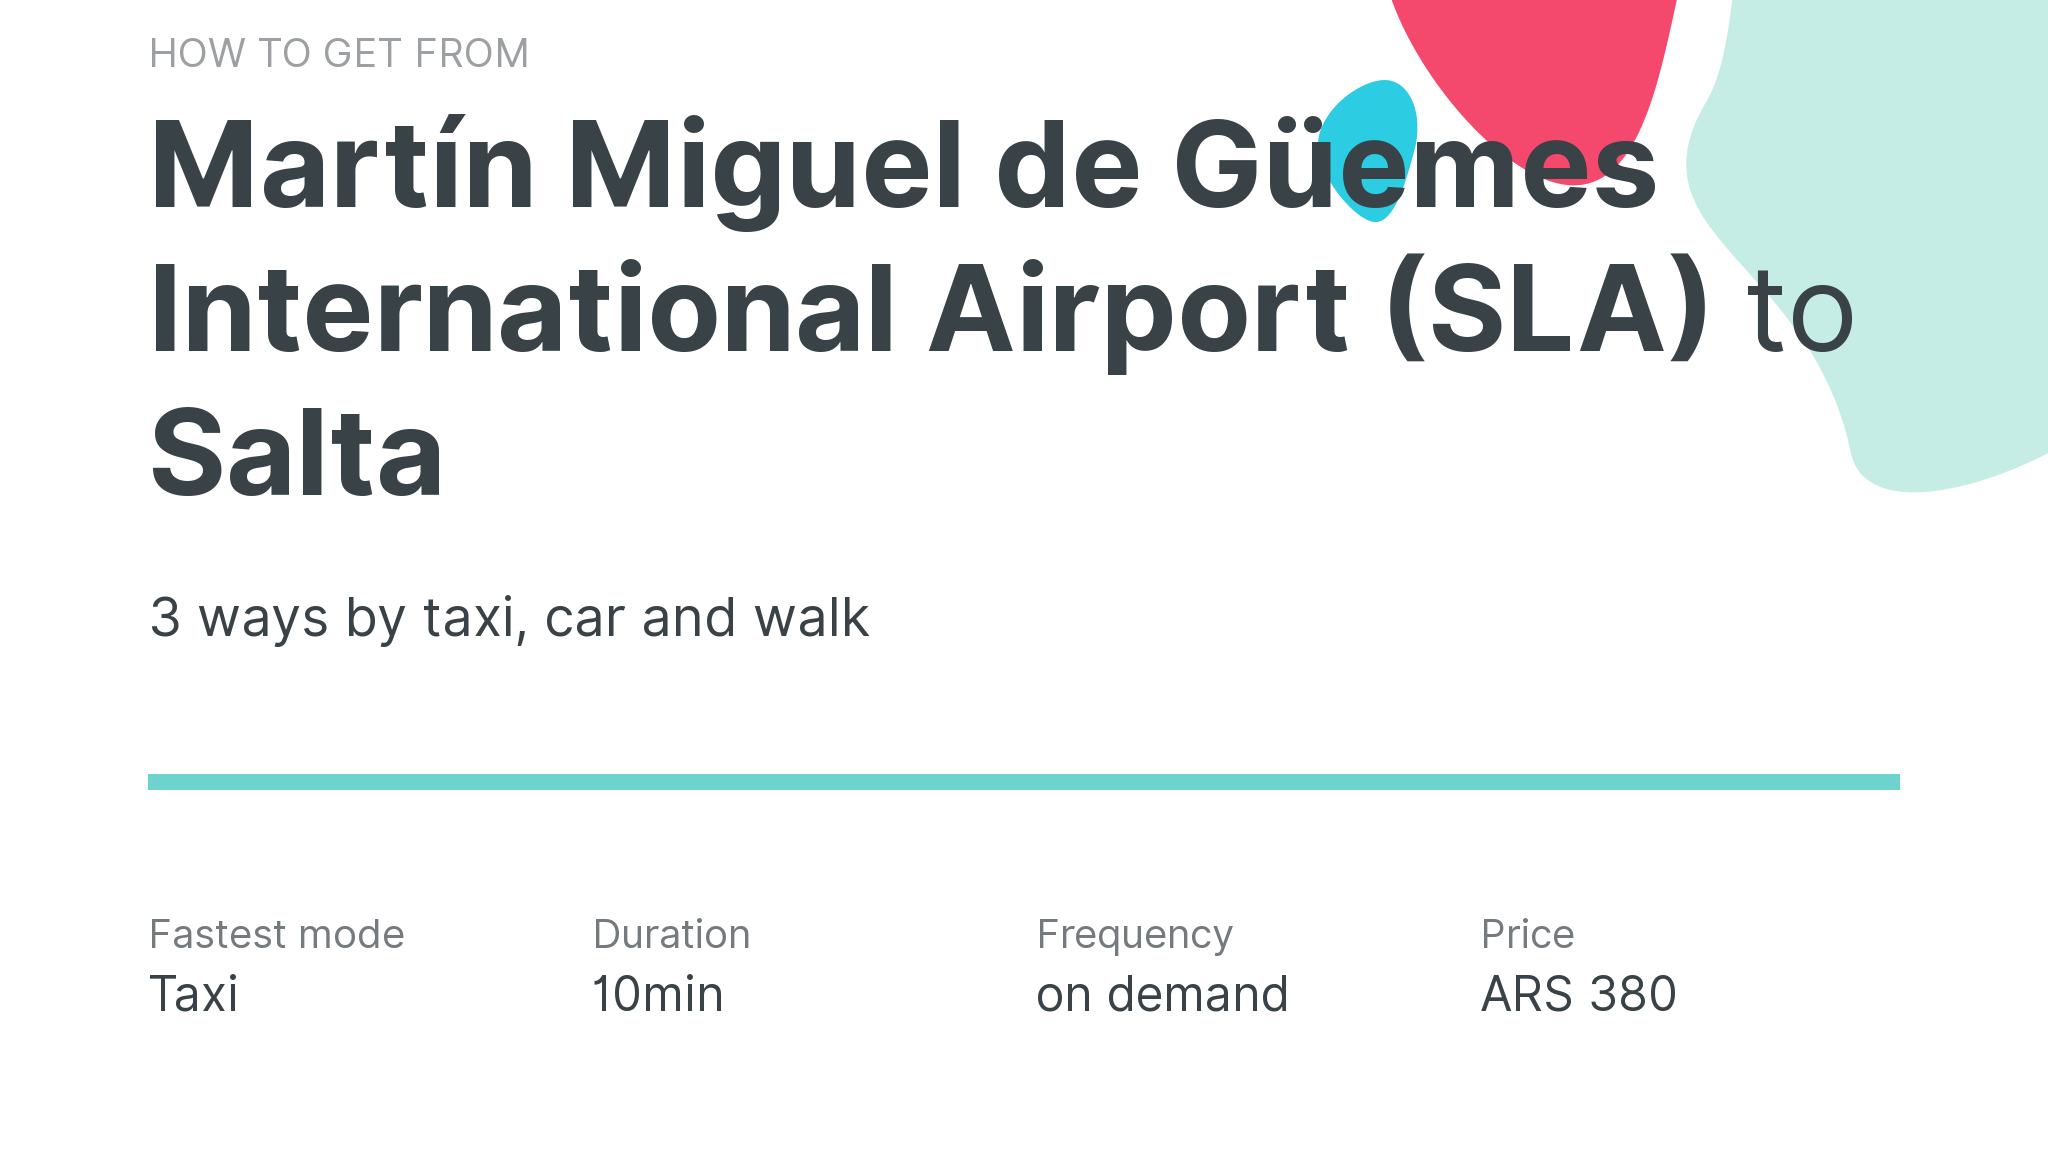 How do I get from Martín Miguel de Güemes International Airport (SLA) to Salta